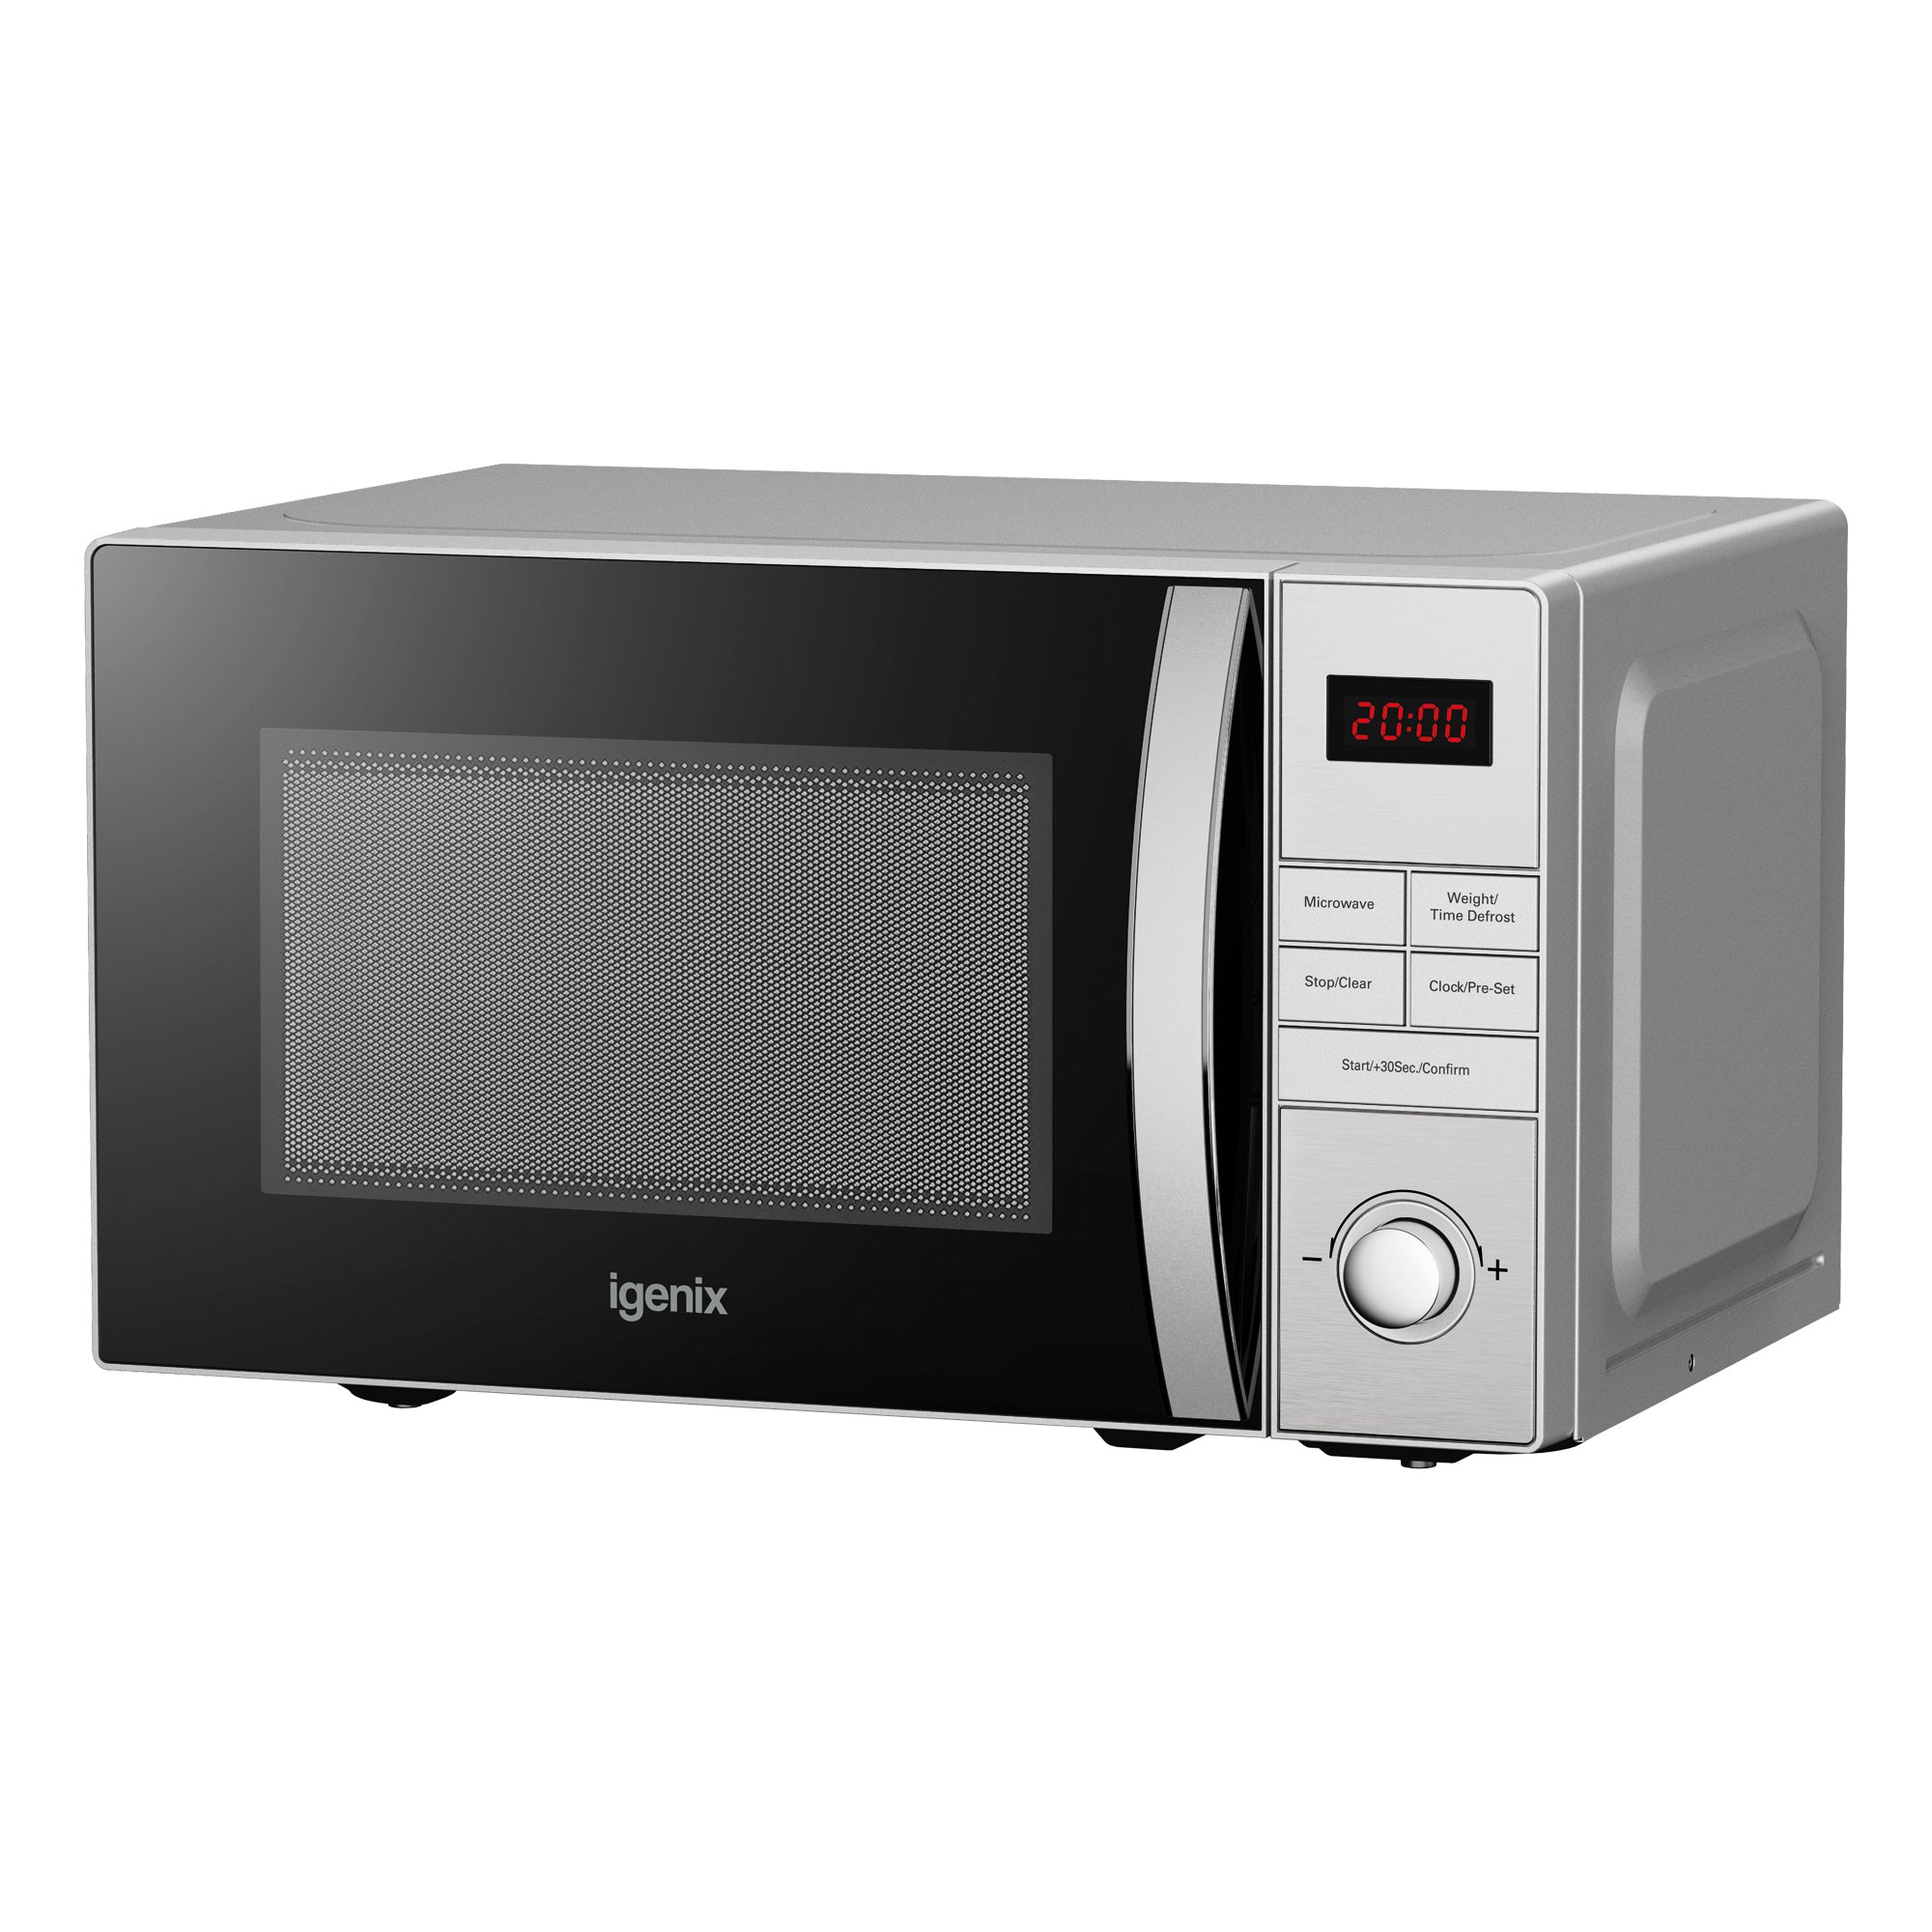 Digital Microwave, 20 Litre, 5 Power Settings, 800W, Stainless Steel